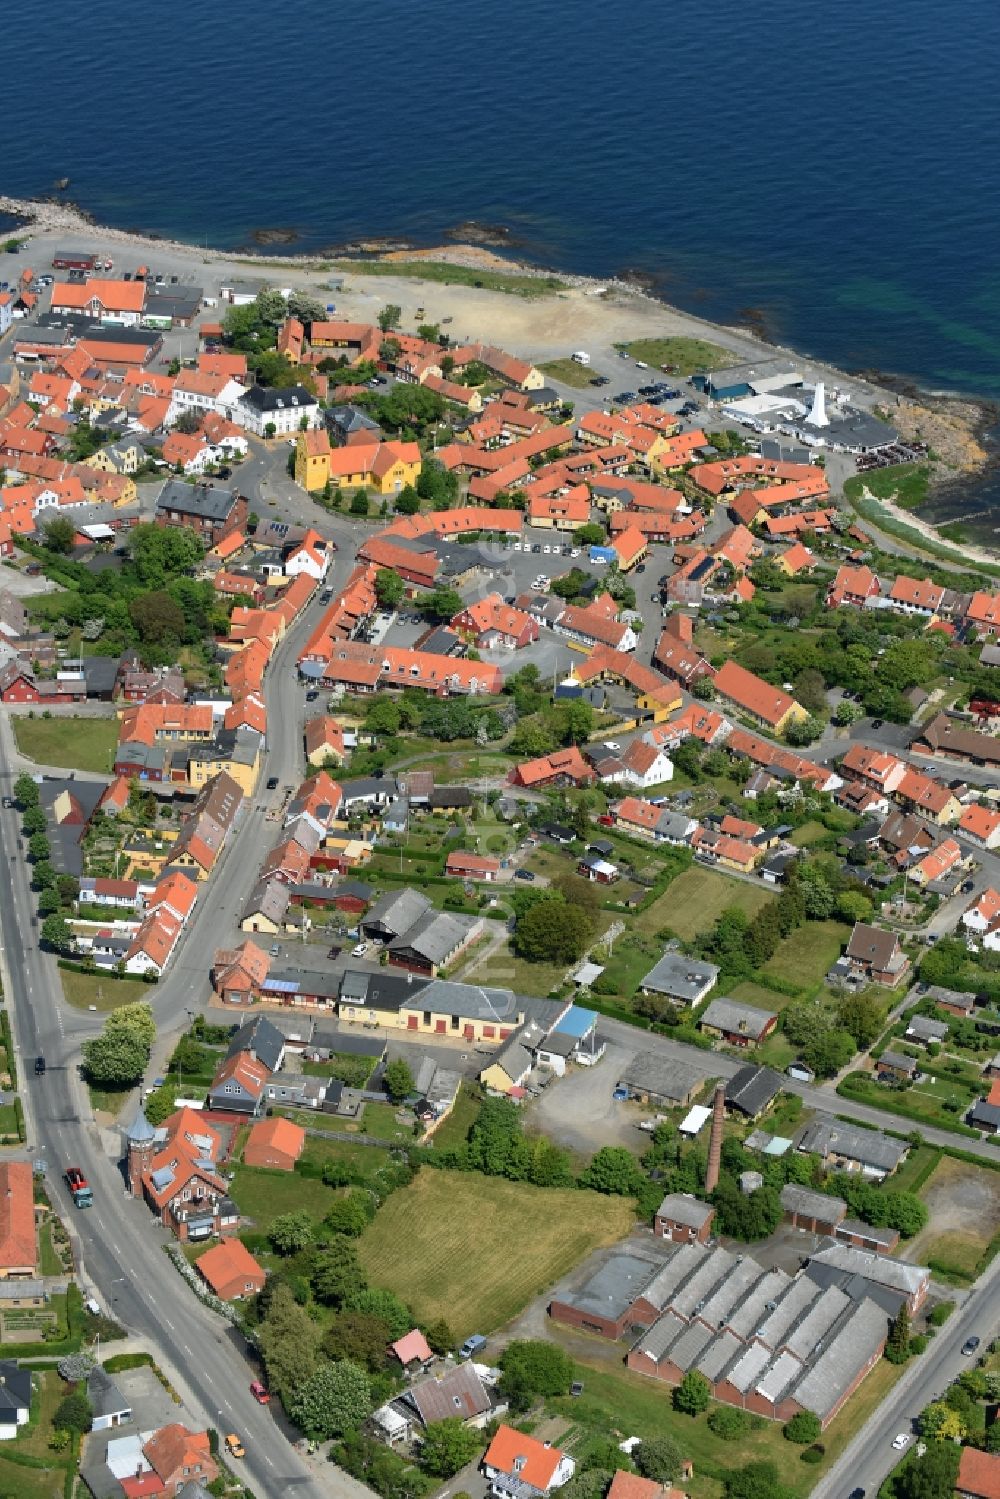 Luftbild Allinge - Meeres-Küste der Ostsee auf der Insel Bornholm in Allinge in Region Hovedstaden, Dänemark